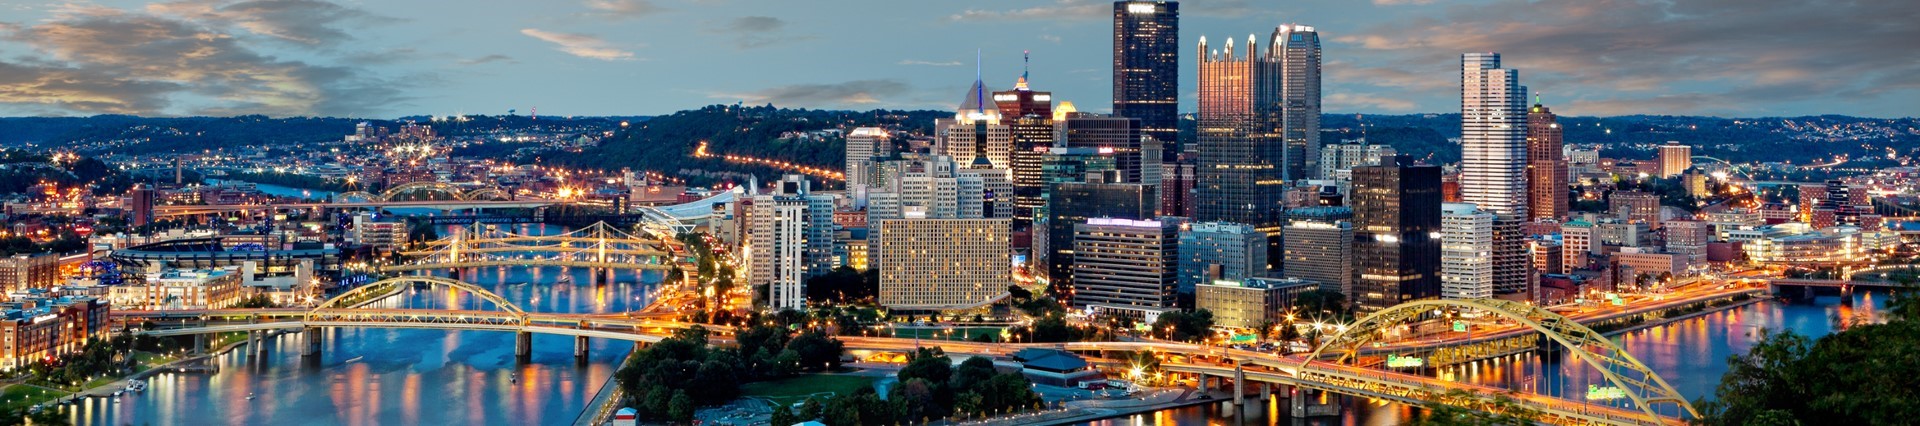 Pittsburgh City at Dusk banner